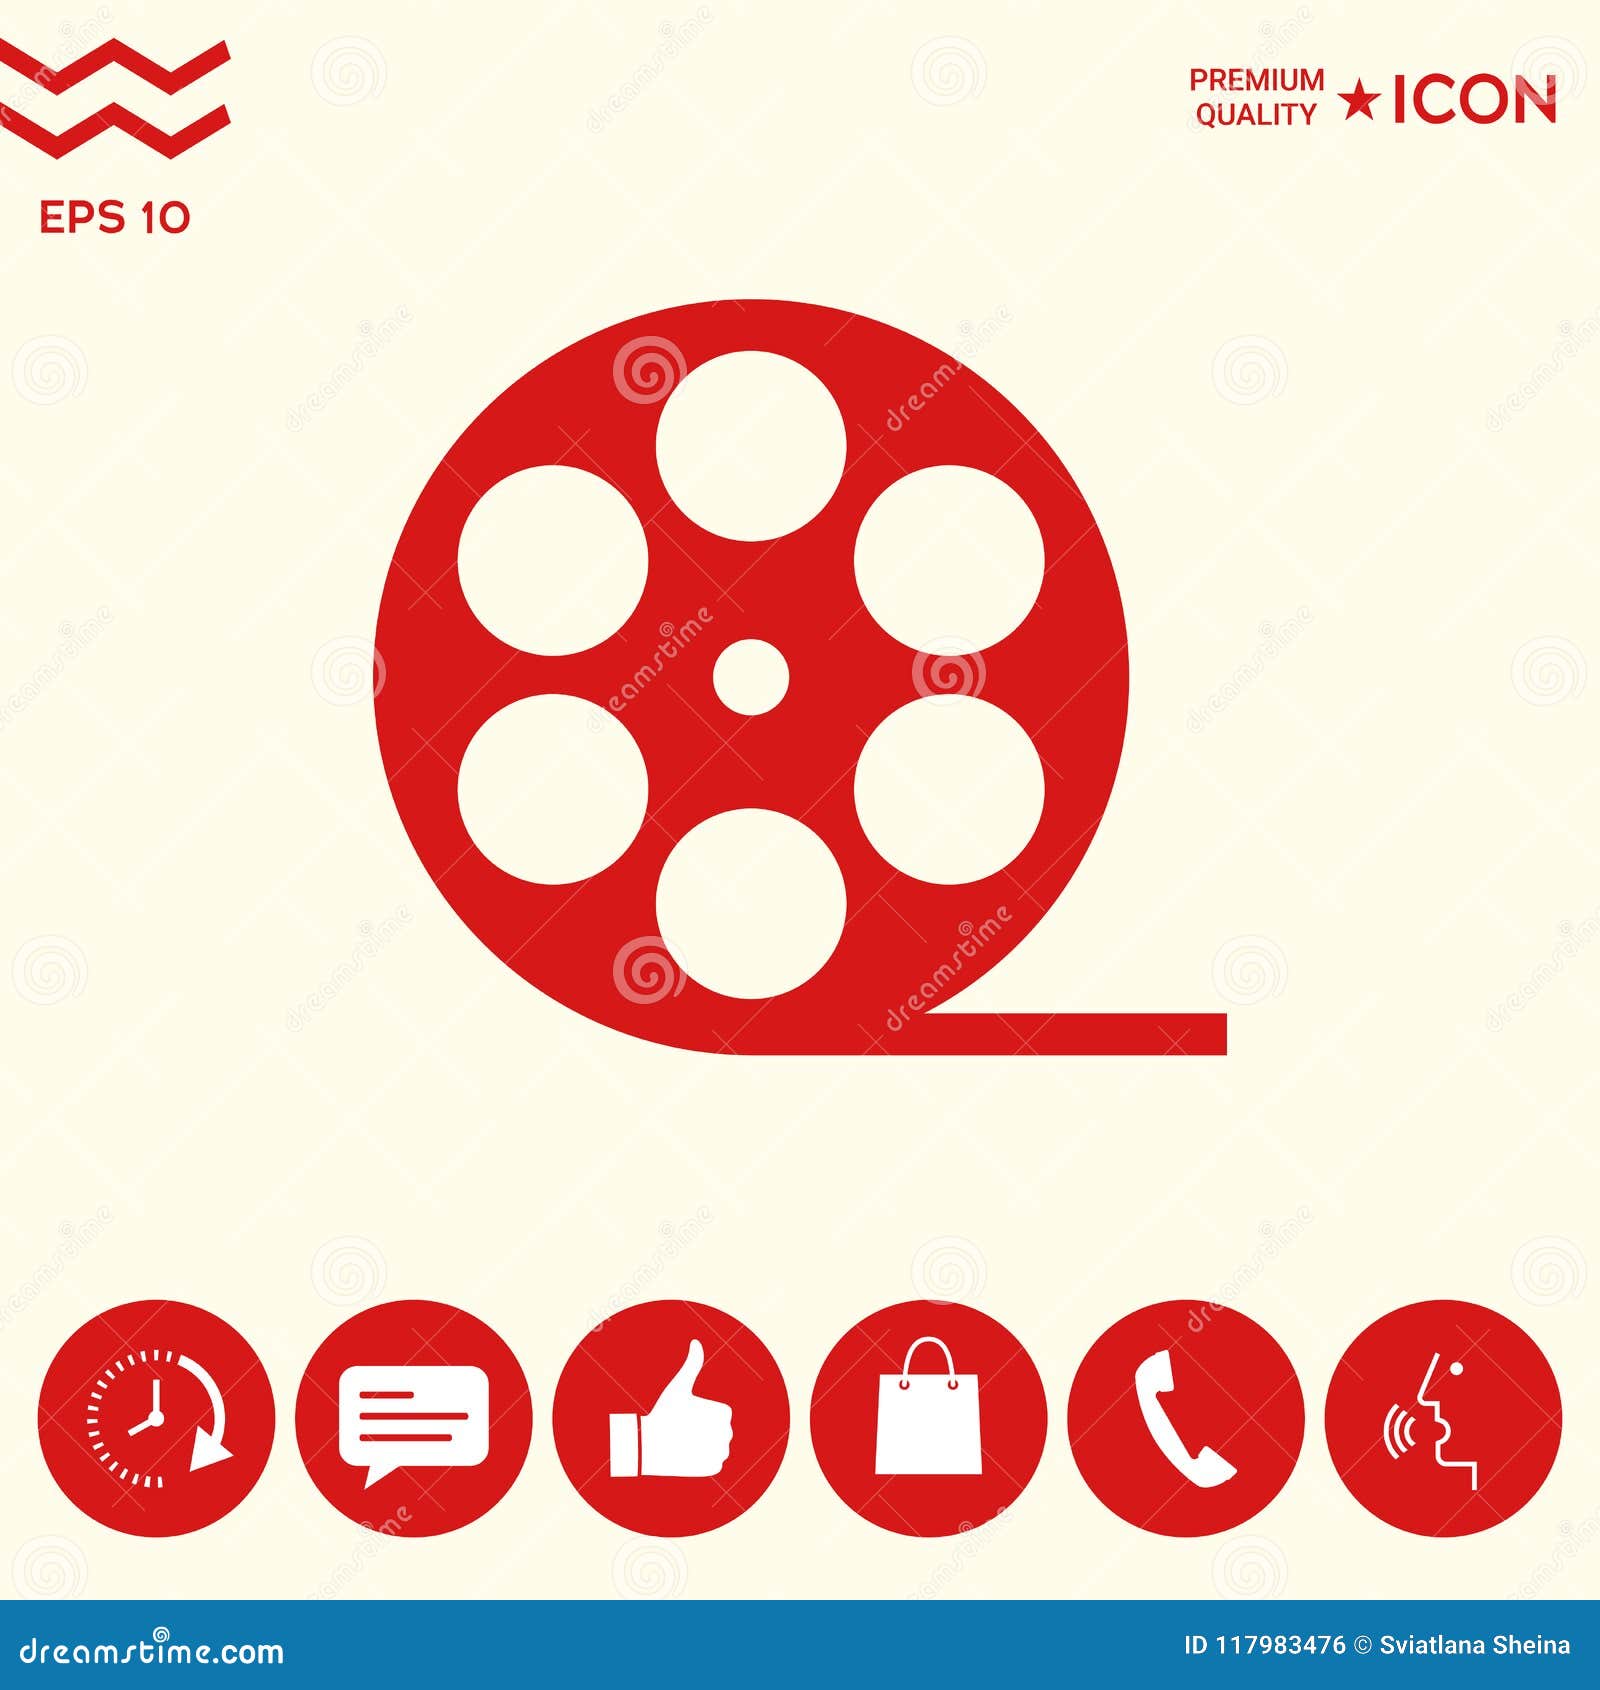 Reel film symbol icon stock vector. Illustration of filmstrip - 117983476